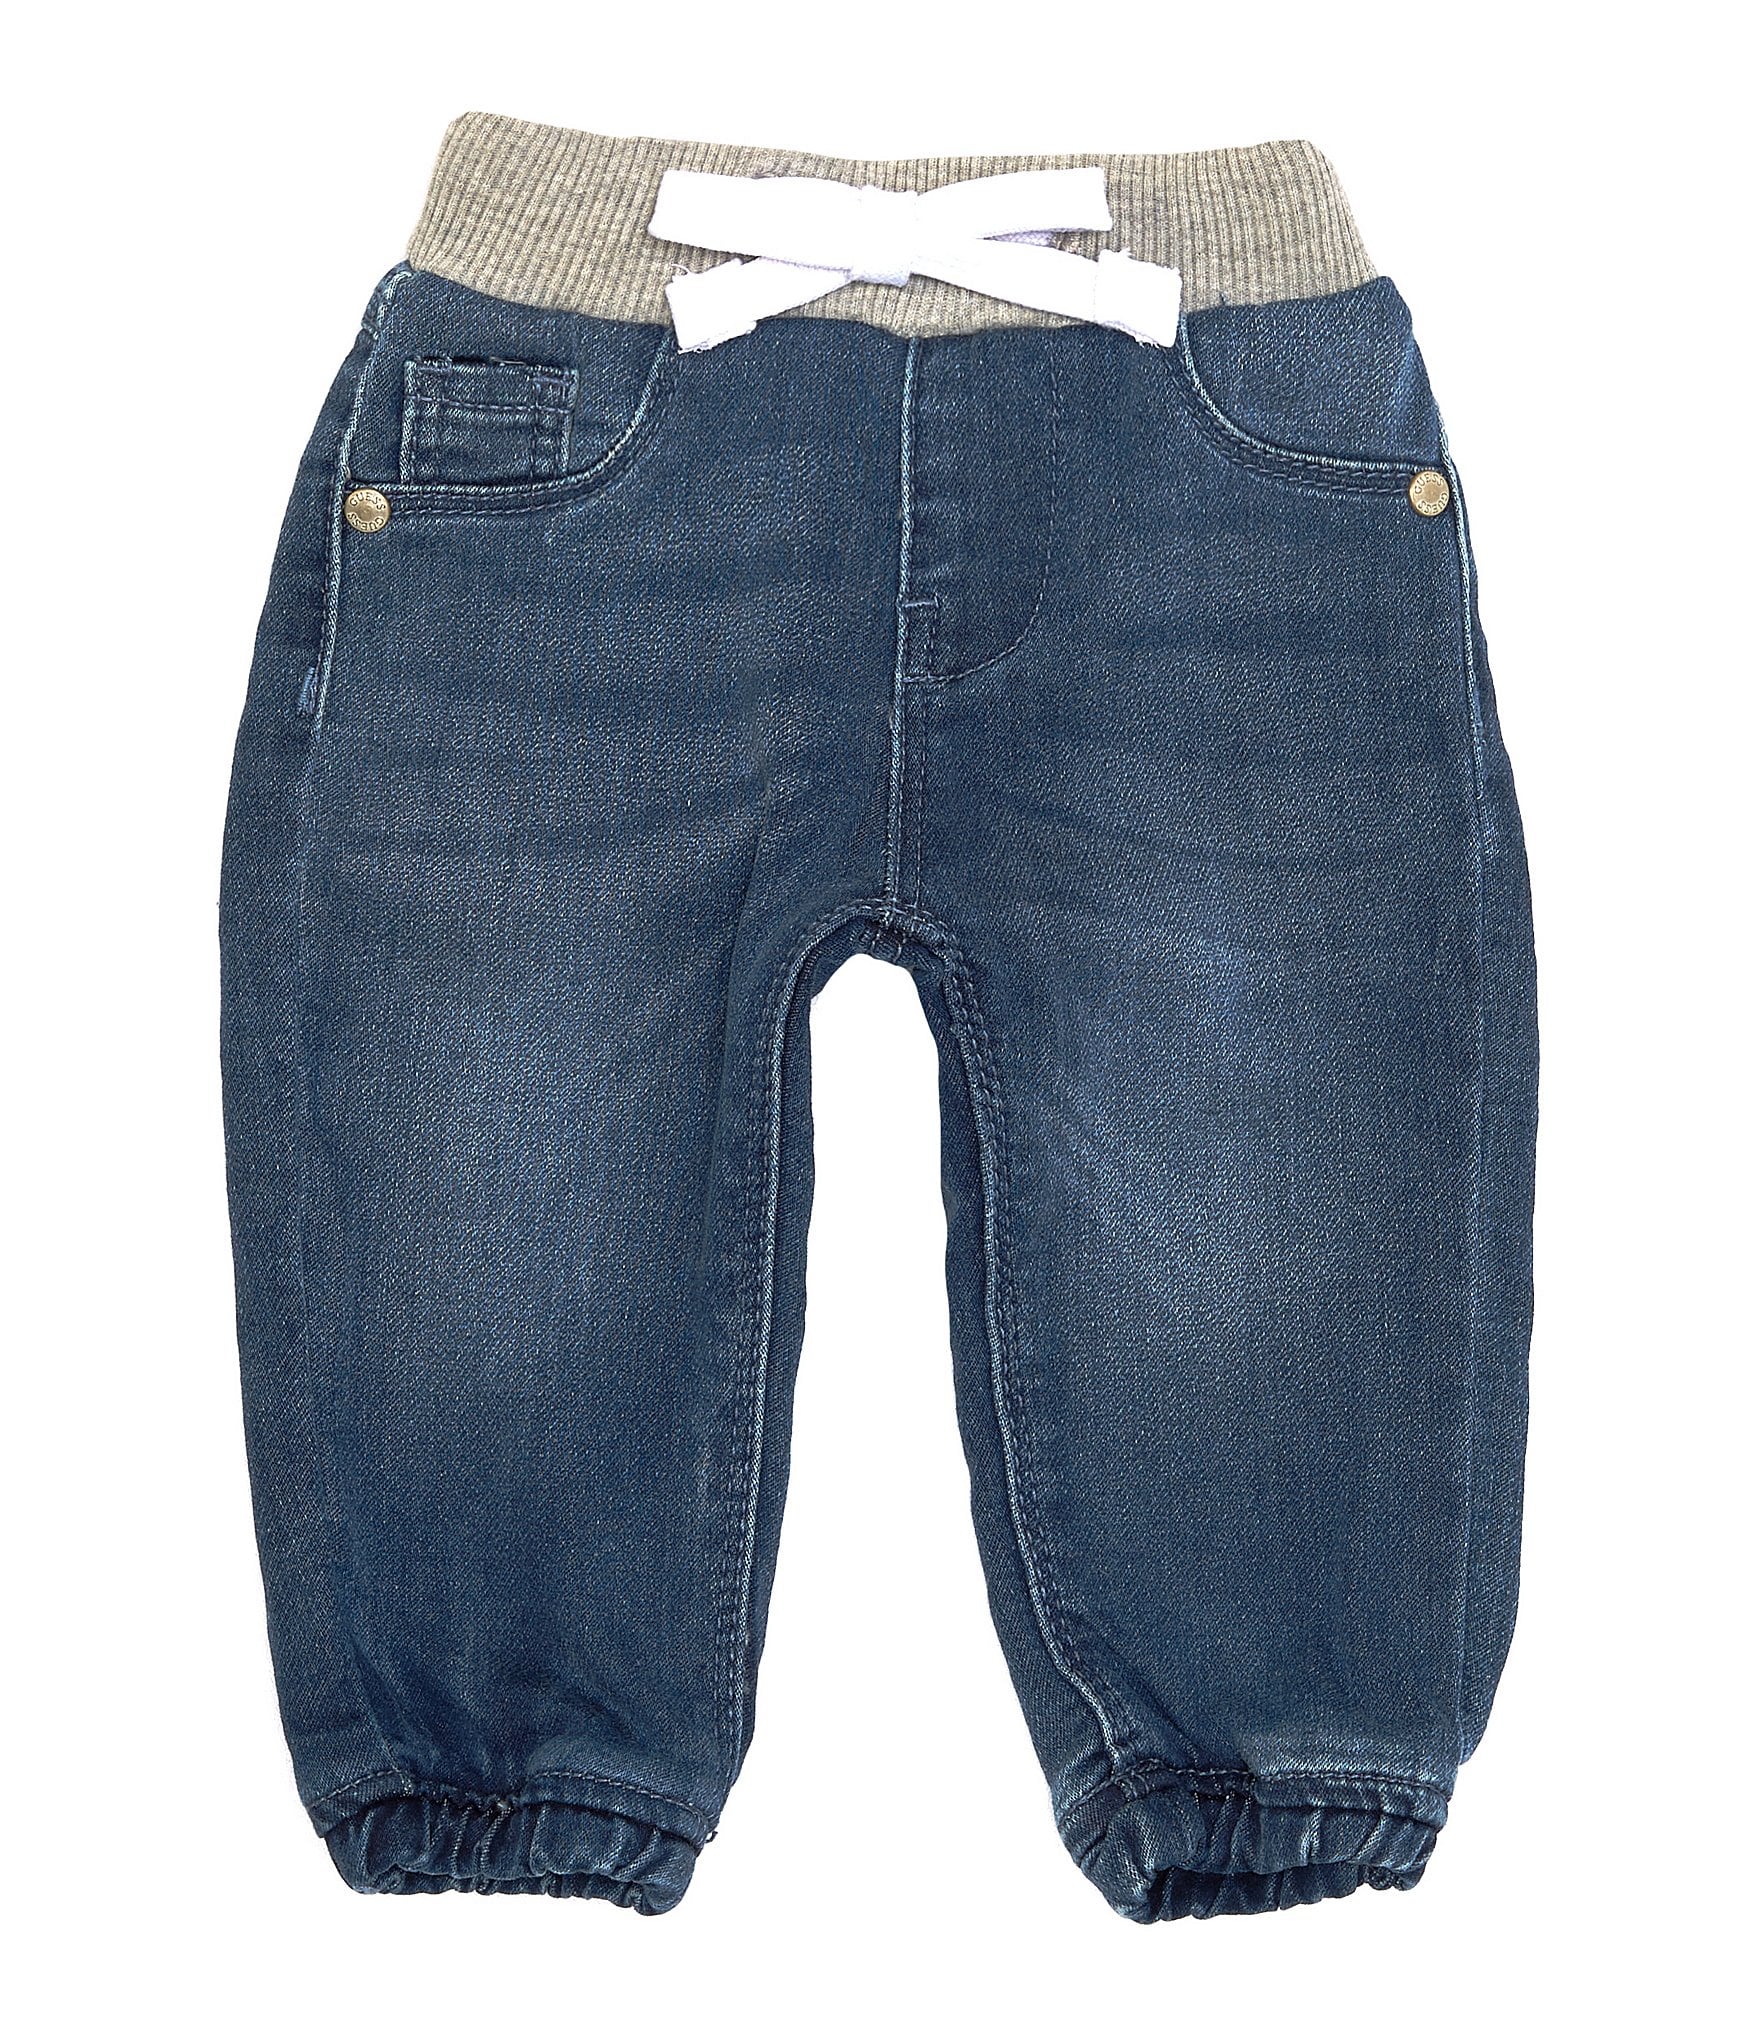 Children's Clothing Jeans Pants | Children's Clothing Jeans 1 2 - 0-6t  Spring Autumn - Aliexpress